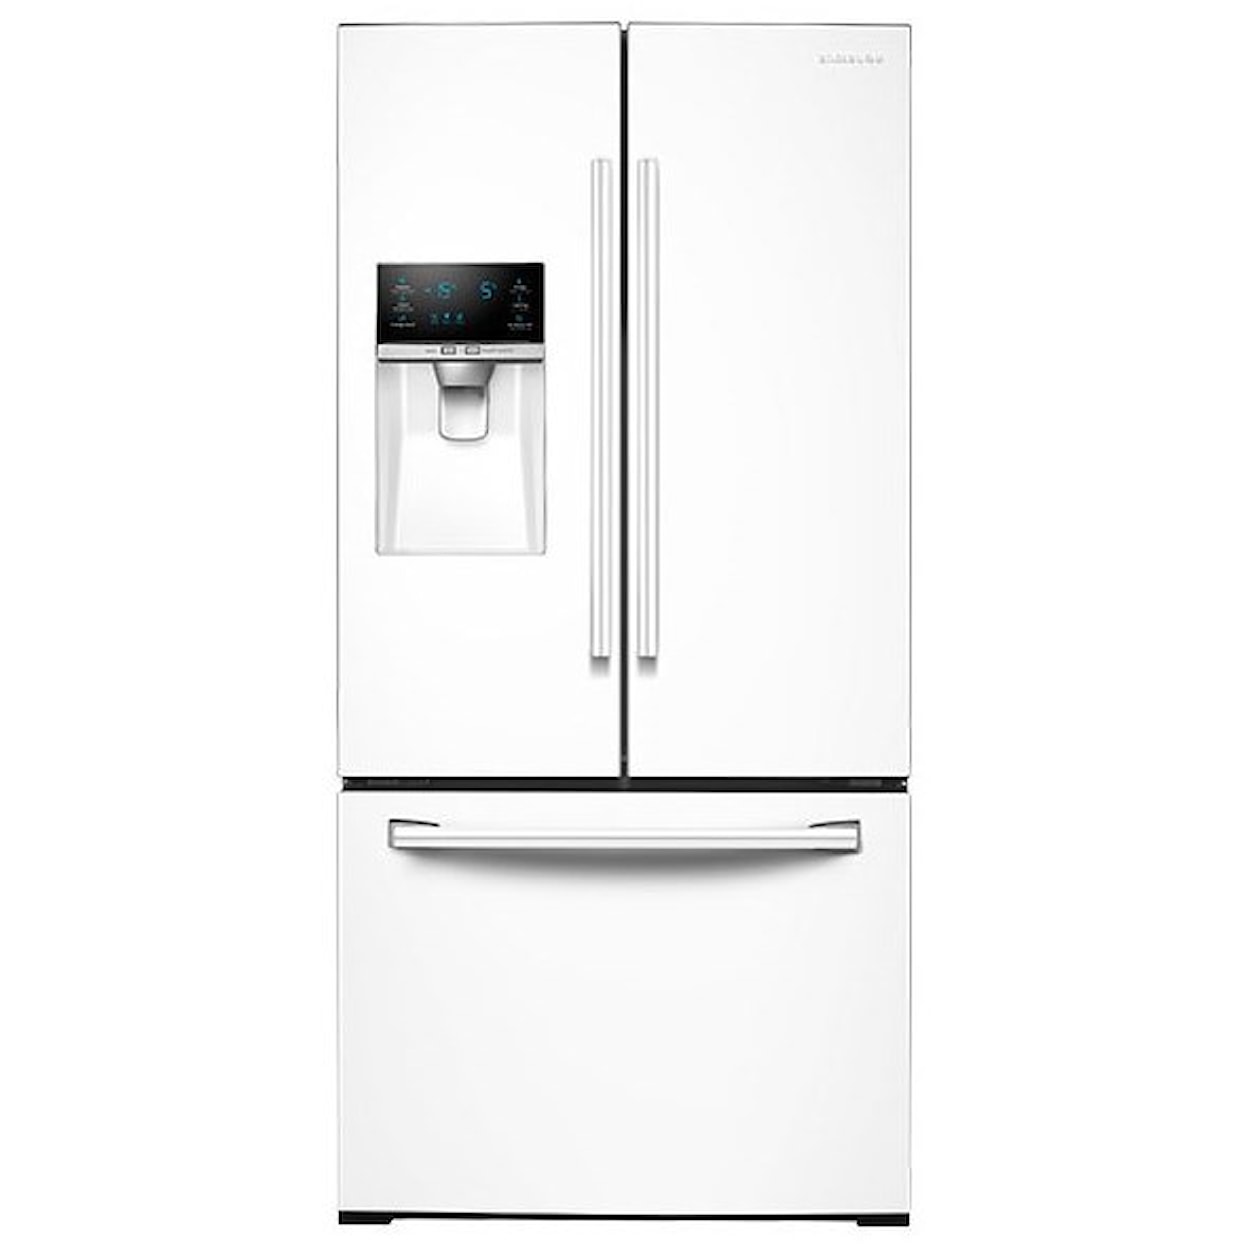 Samsung Appliances French Door Refrigerators 26 cu. ft. 3-Door French Door Refrigerator